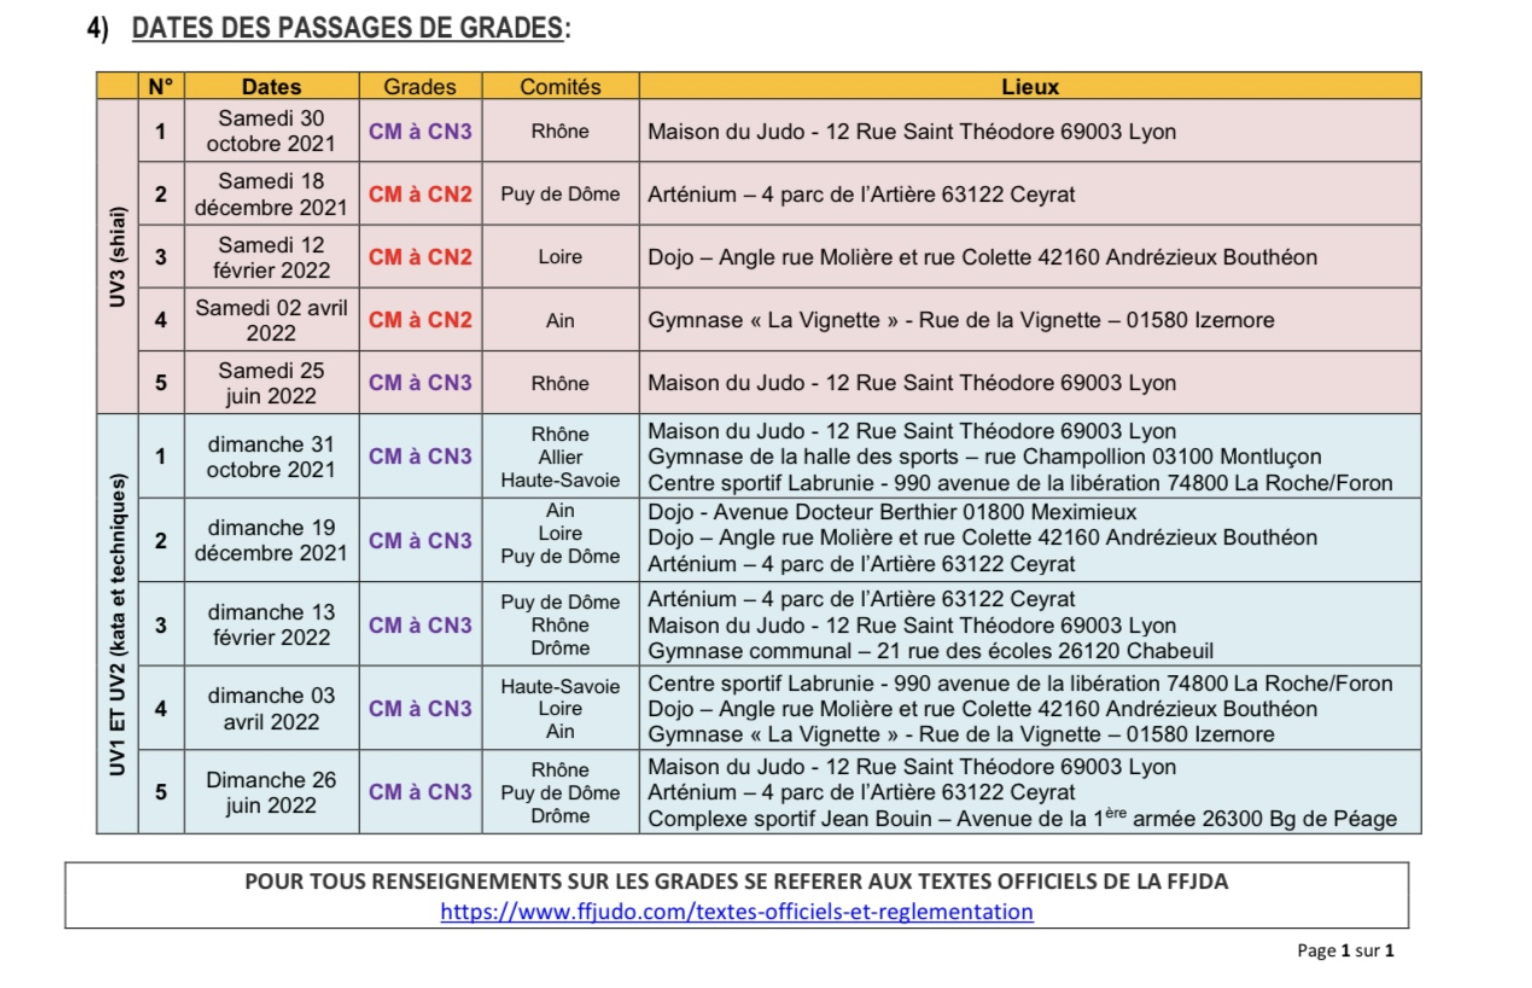 Date passage grades 21 22